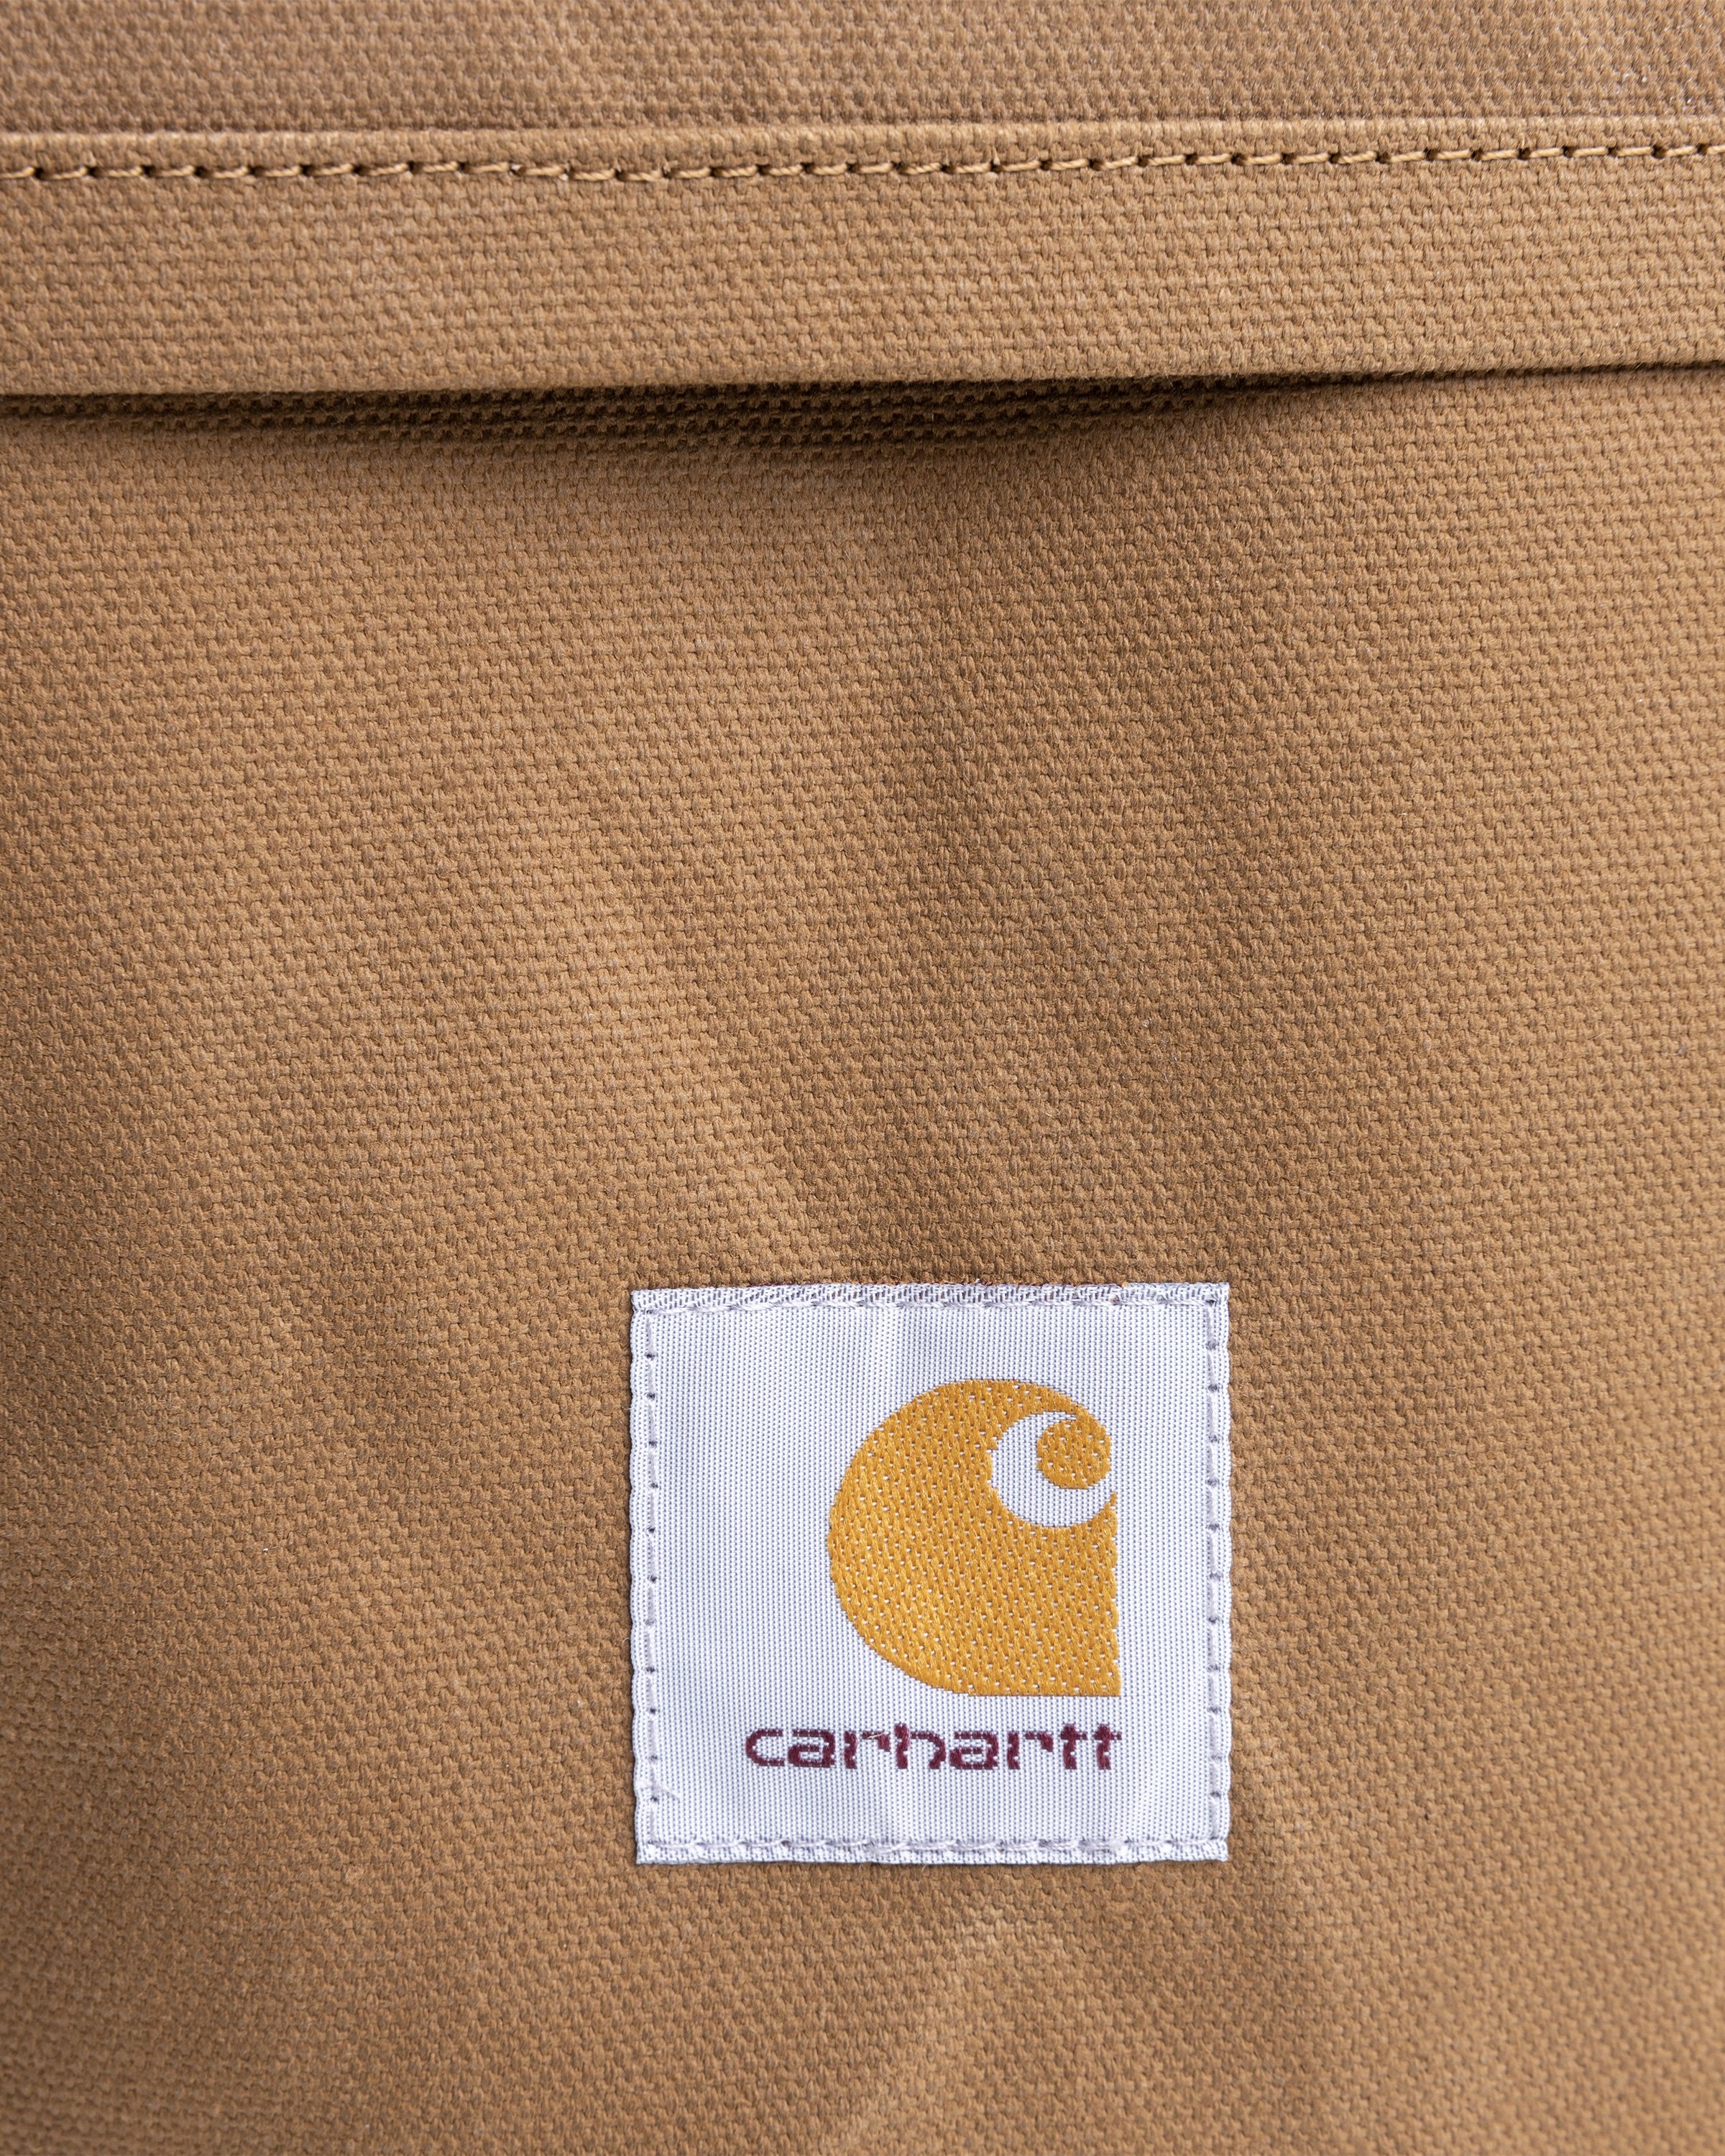 Carhartt WIP - Canvas Planter Set Hamilton Brown - Lifestyle - Brown - Image 4